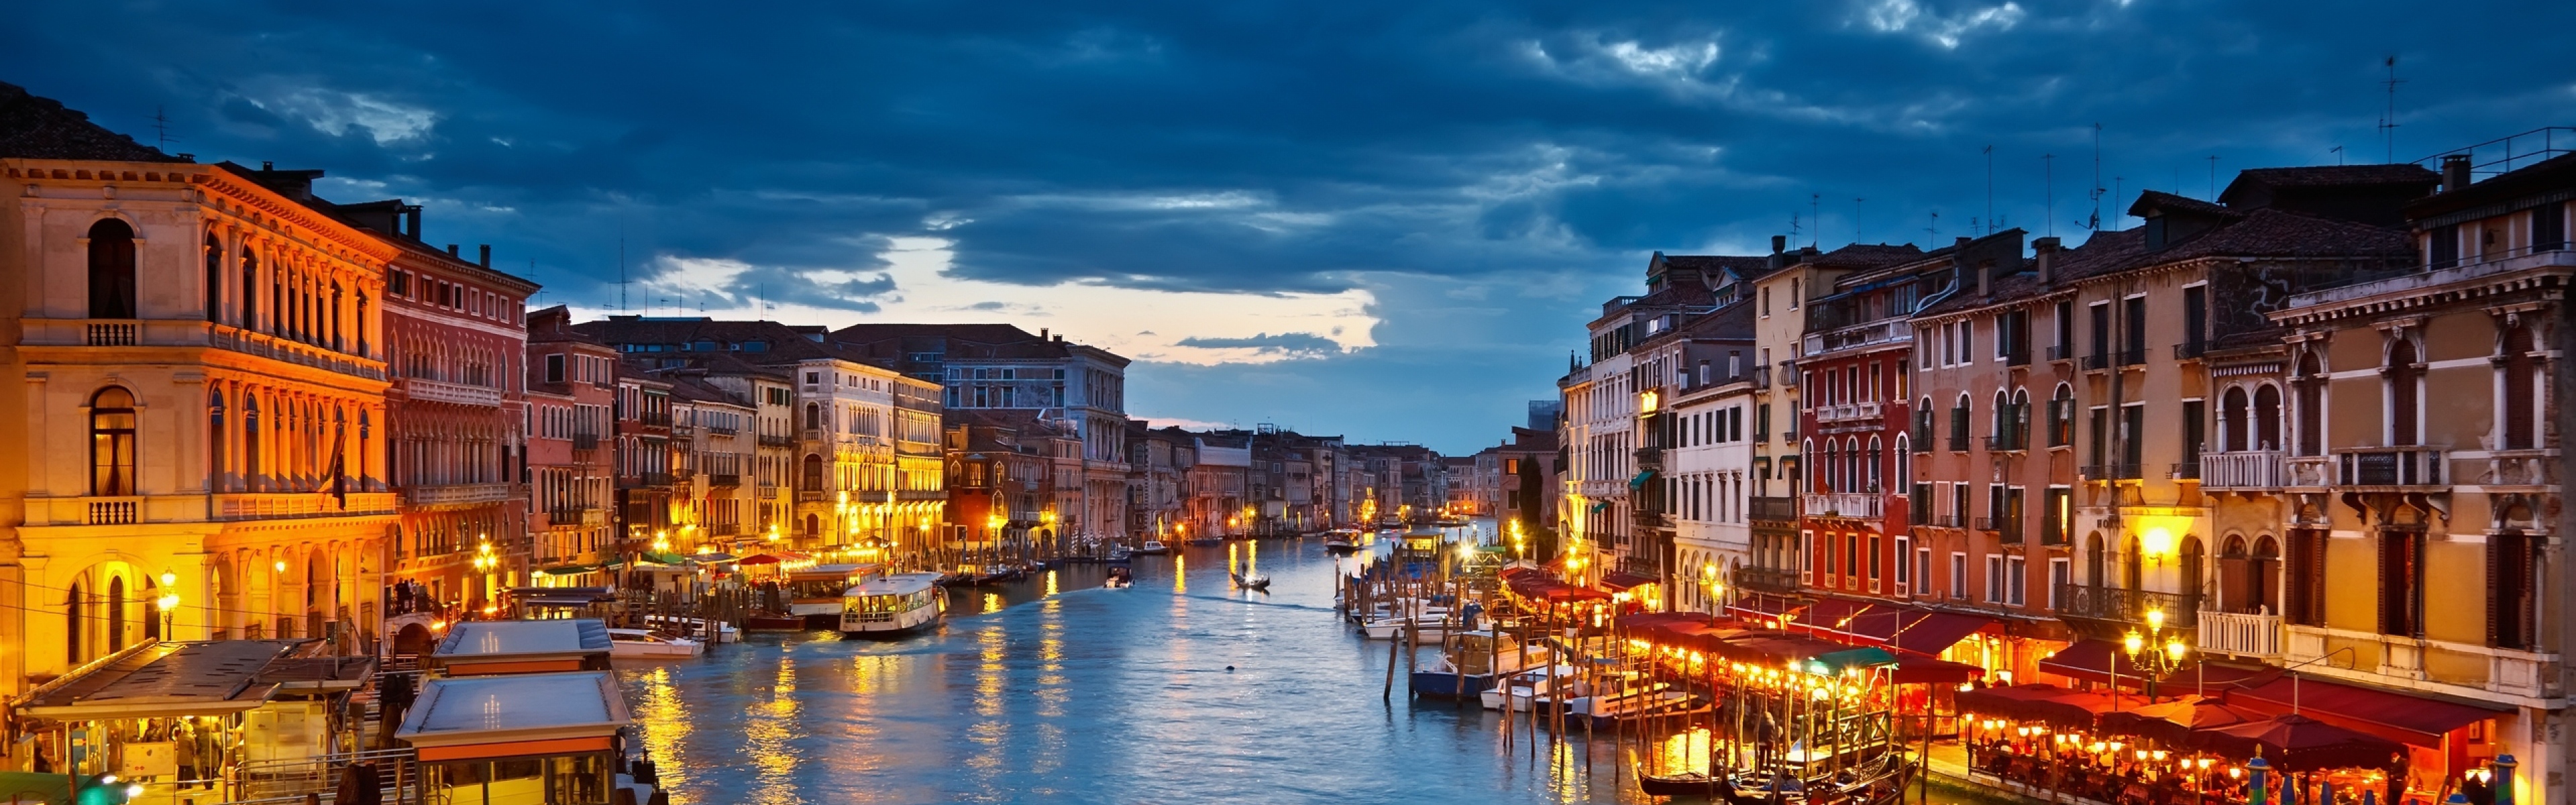 Wallpaper Italy Venice Gondolas River